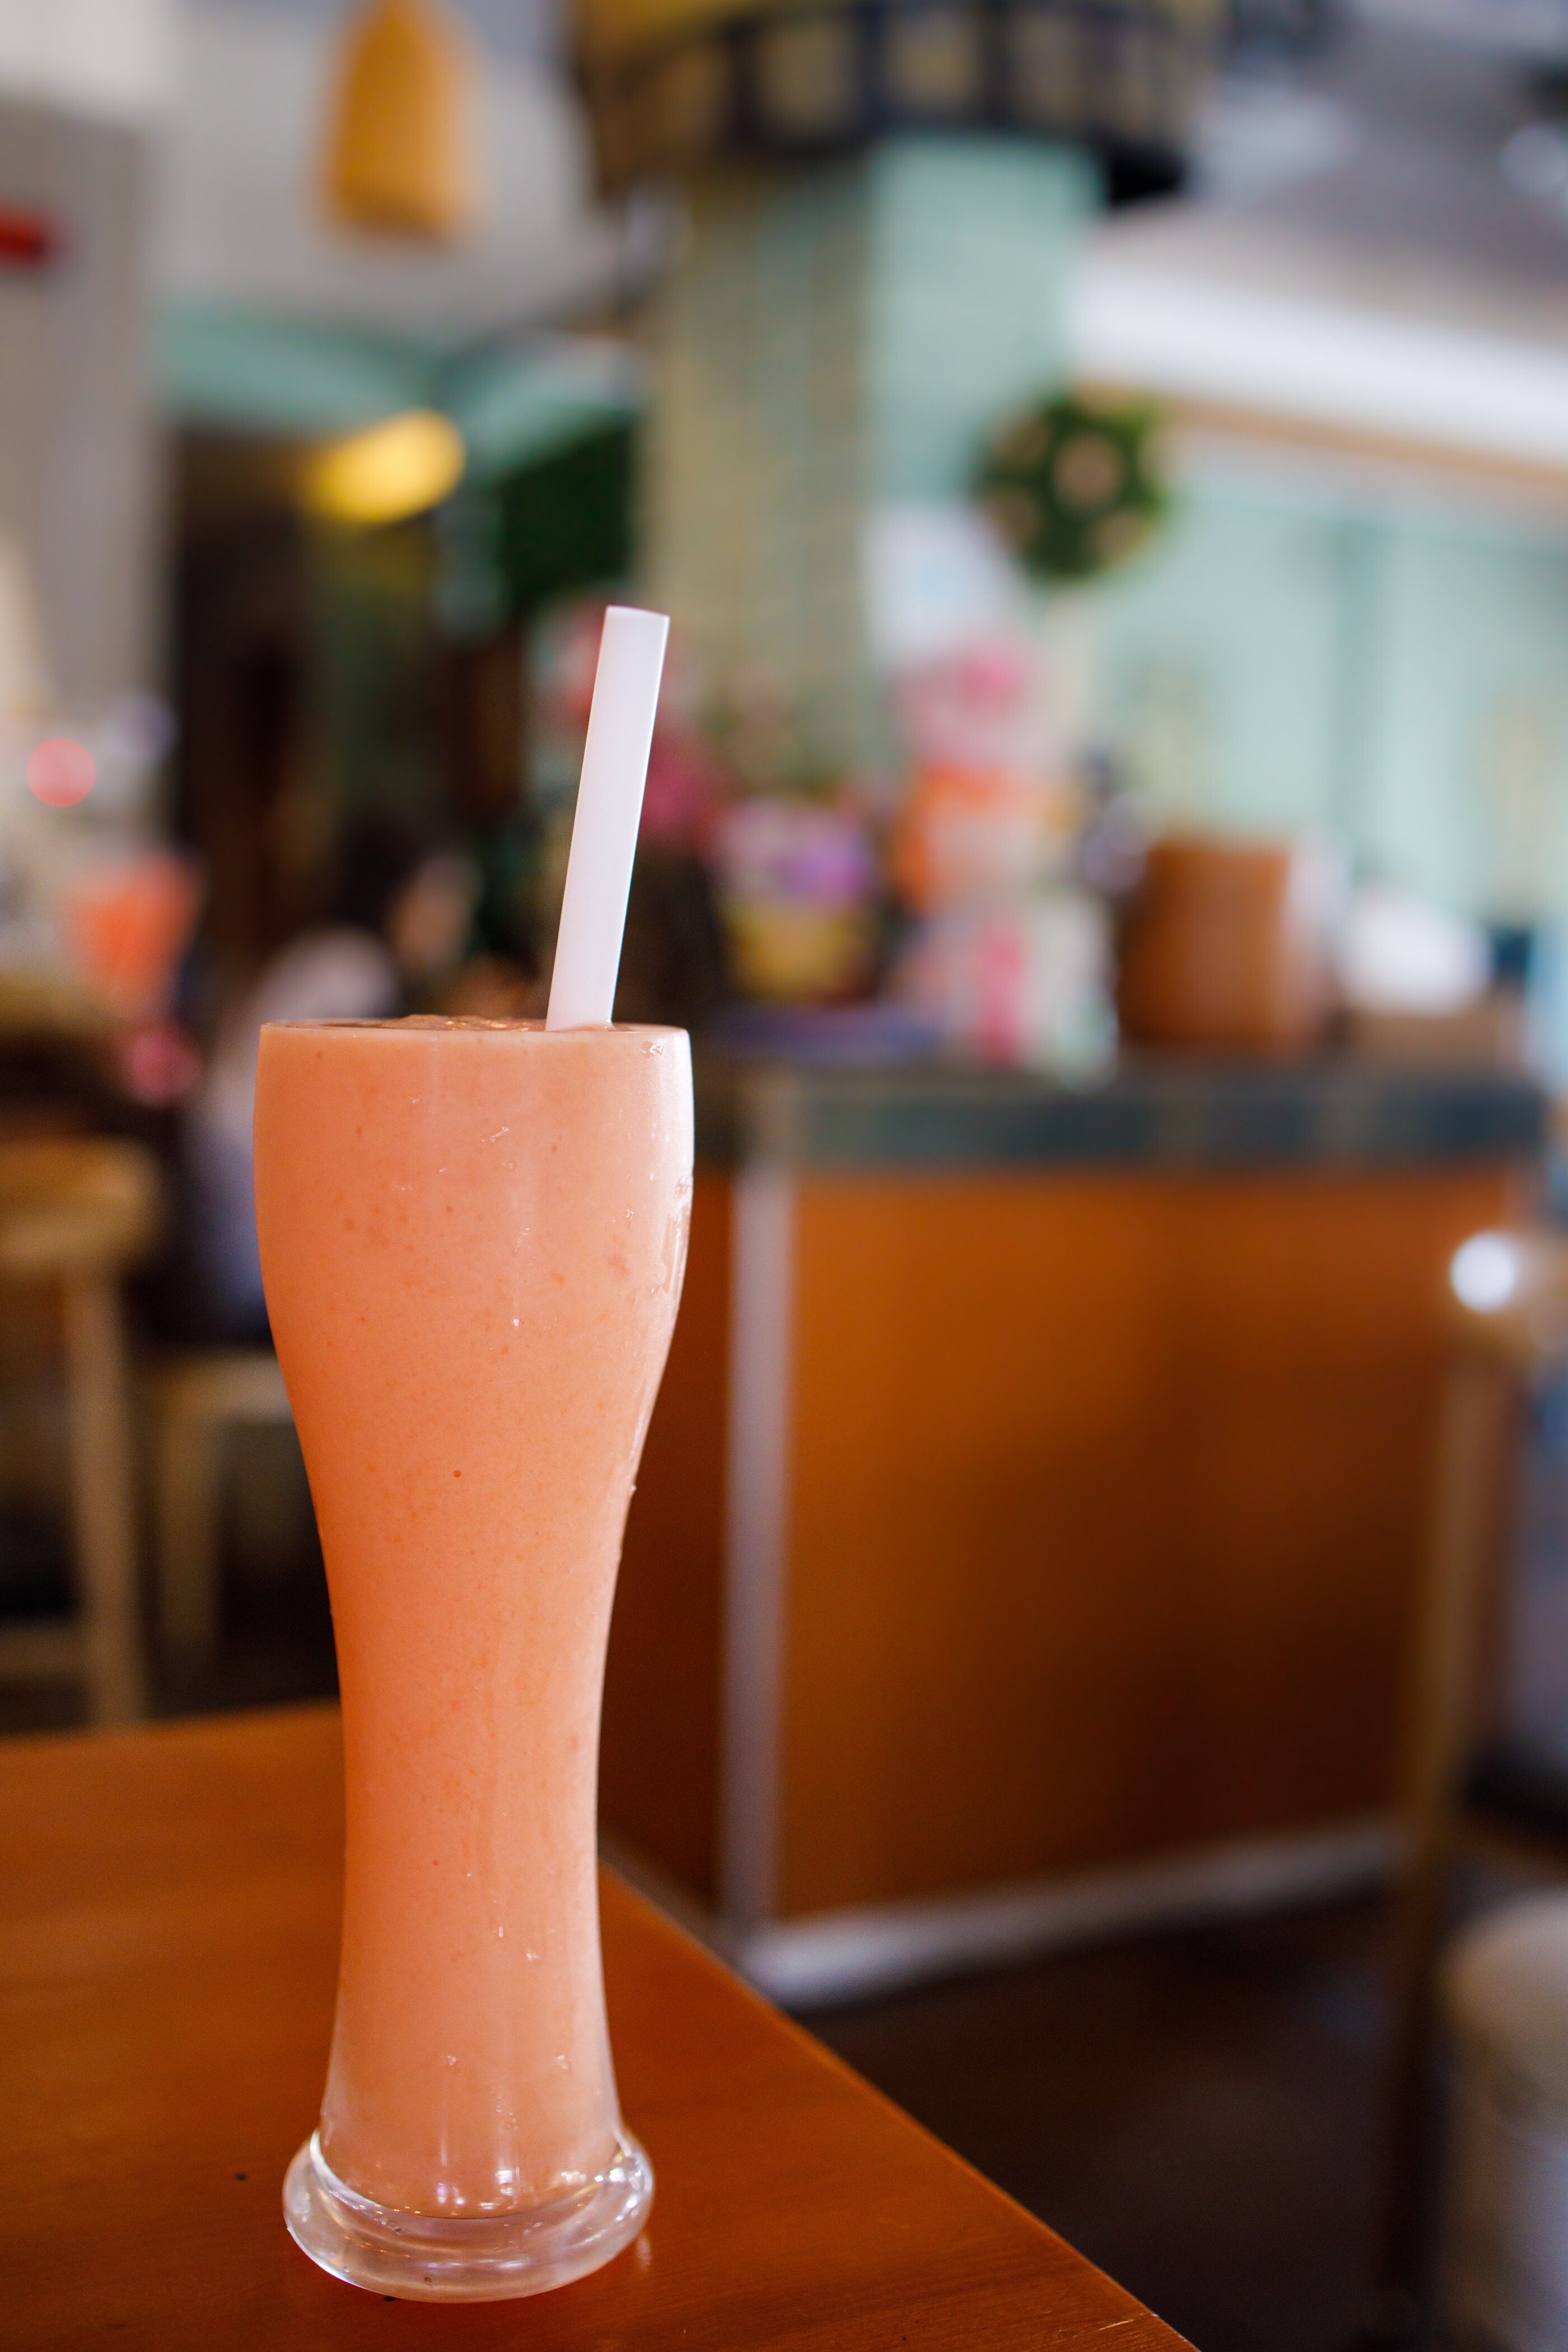 Despite its popularity within Taiwan, papaya milk never caught on the same way bubble tea did. Photo: Shutterstock